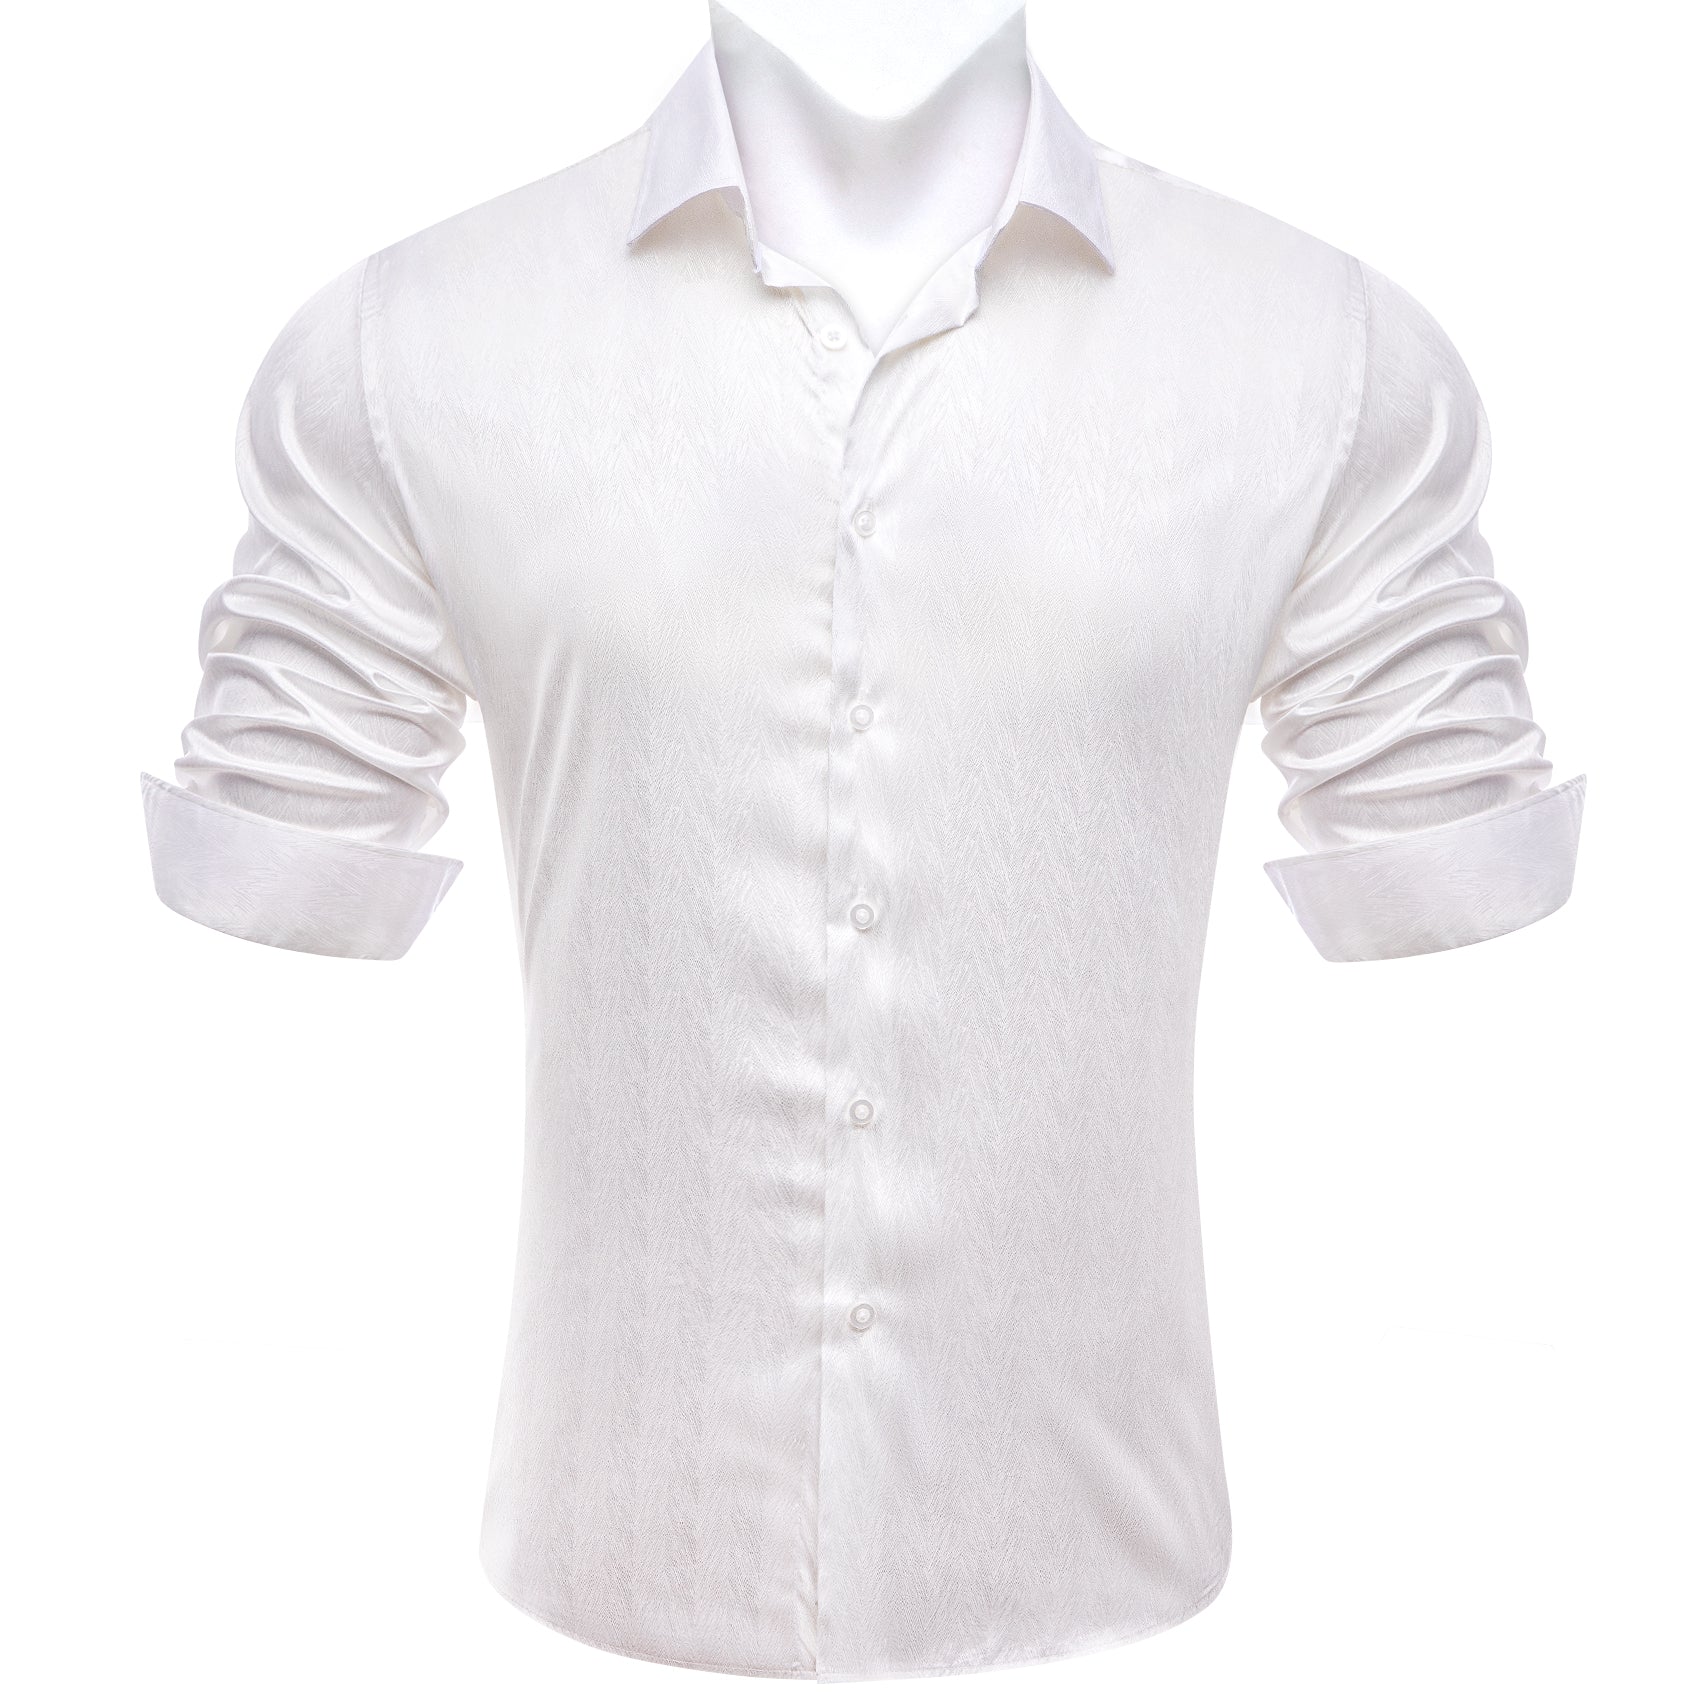 Barry.wang White Solid Silk Men's Shirt